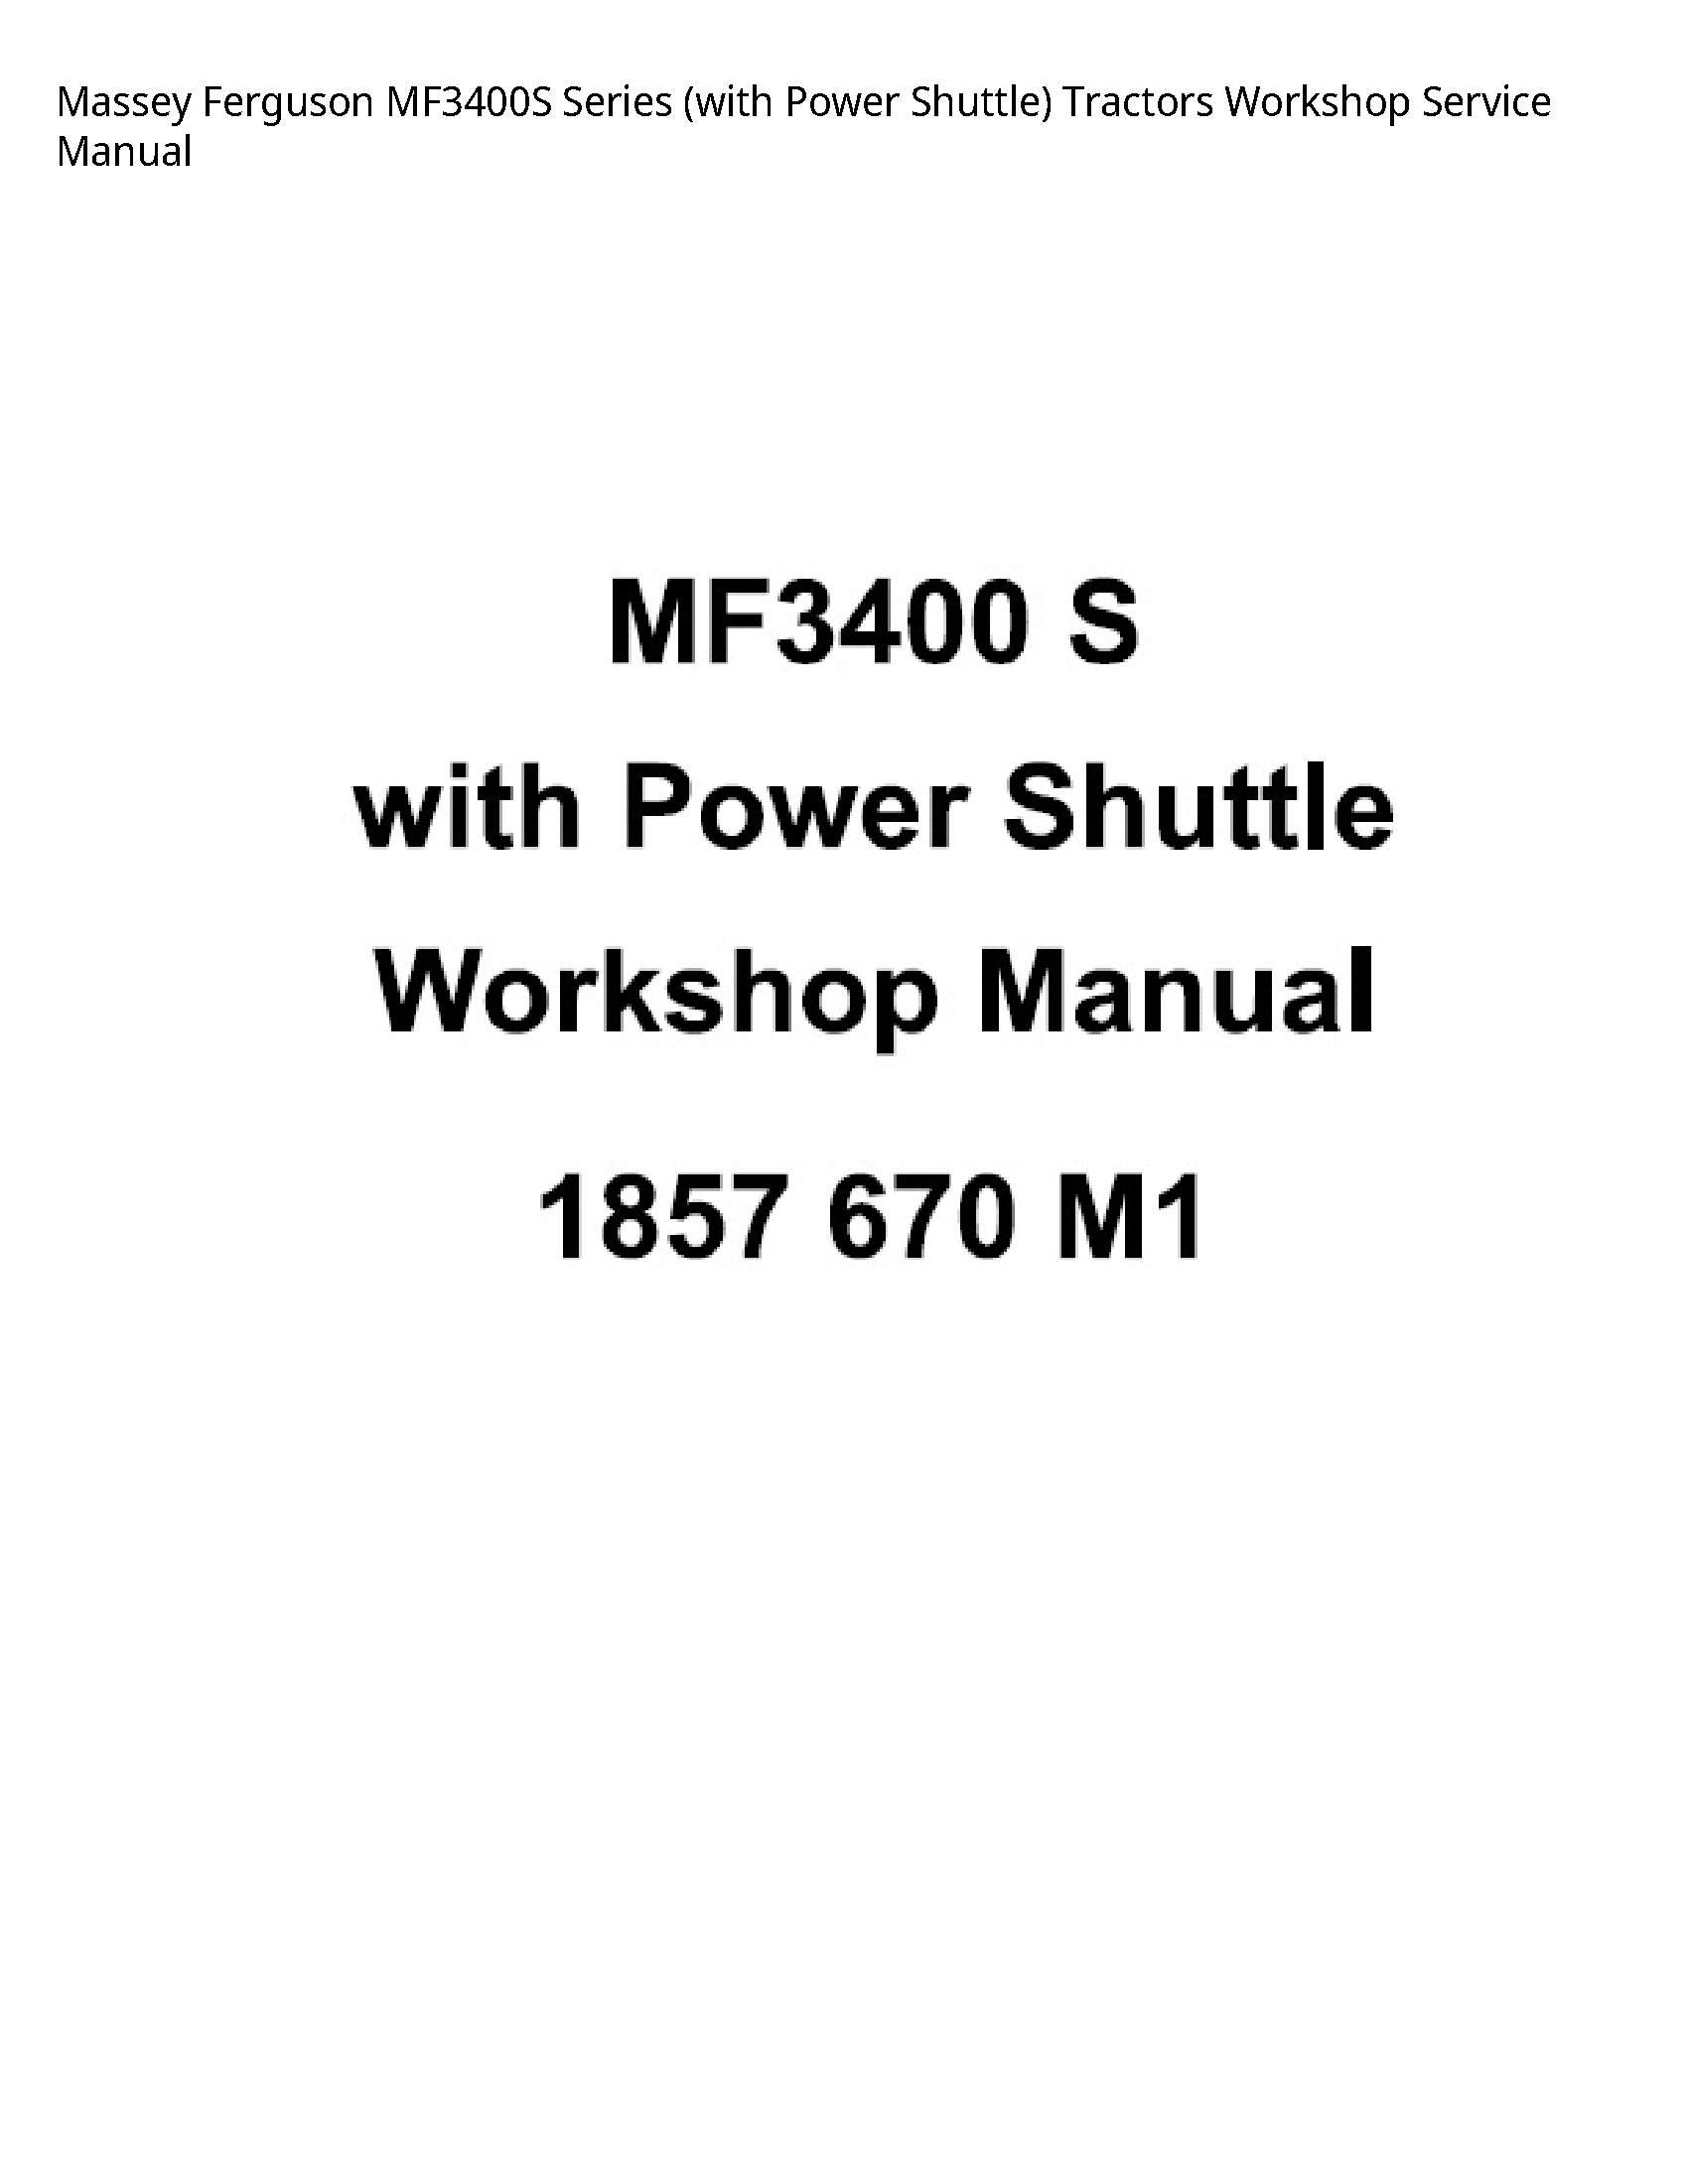 Massey Ferguson MF3400S Series (with Power Shuttle) Tractors Service manual